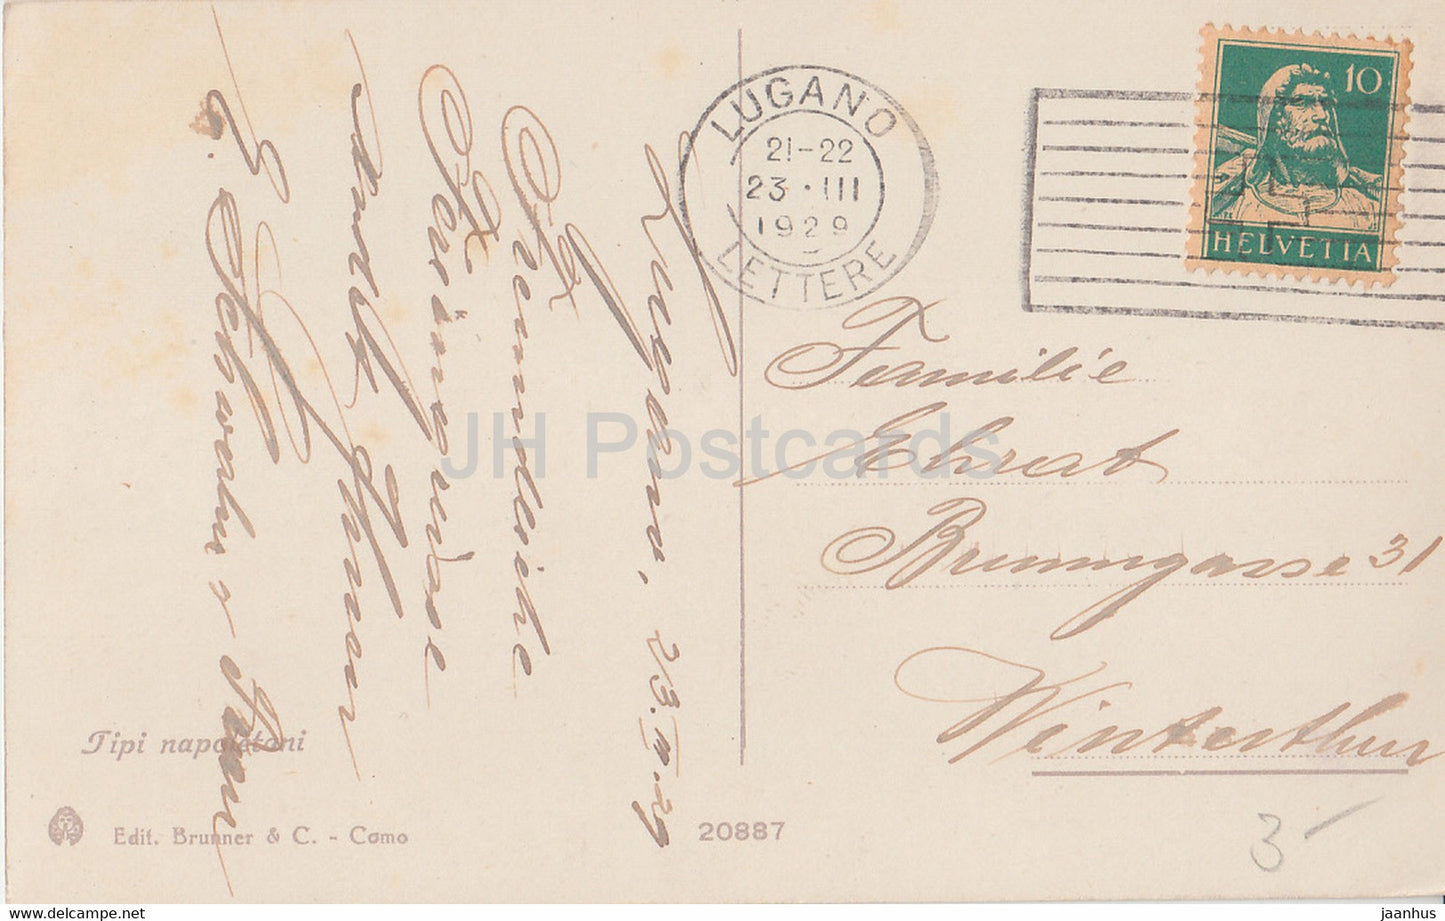 Tipi Napoletani - pâtes - spaghetti - garçons - enfants - Brunner &amp; C - 20887 - carte postale ancienne - 1929 - Italie - utilisé